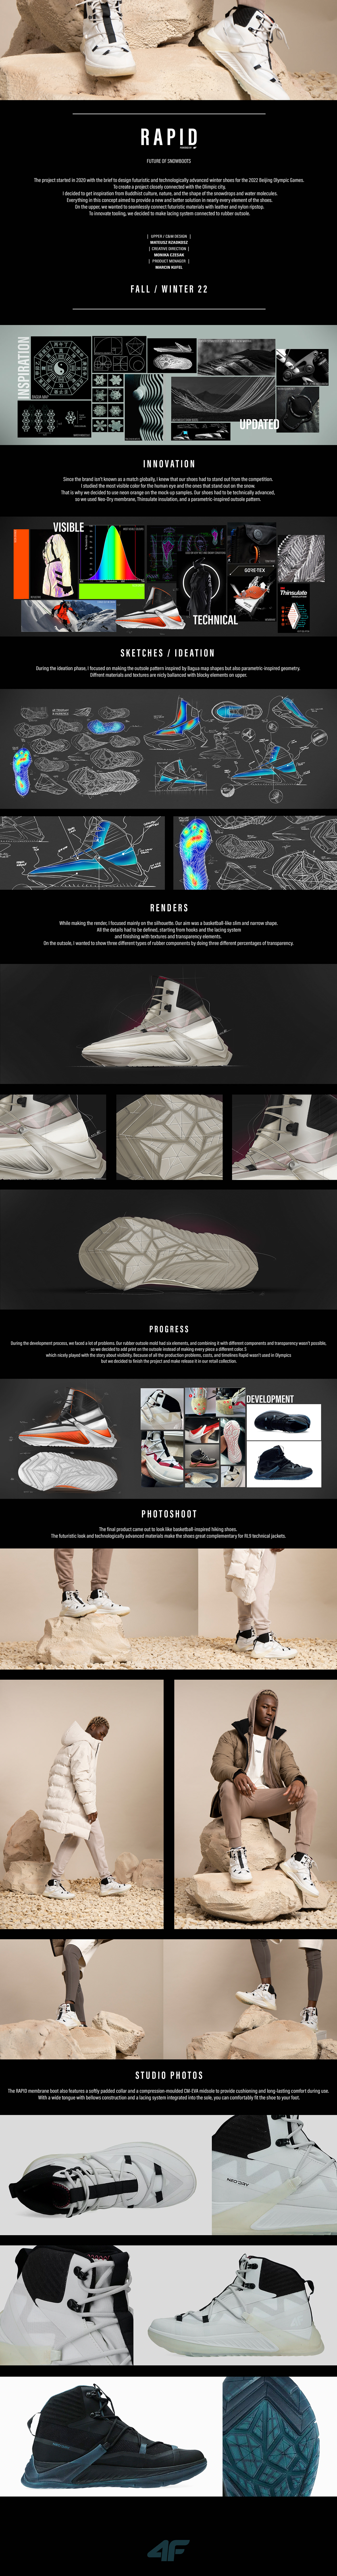 adidas basketball footwear footwear design hiking new Nike Olympics Performance winter